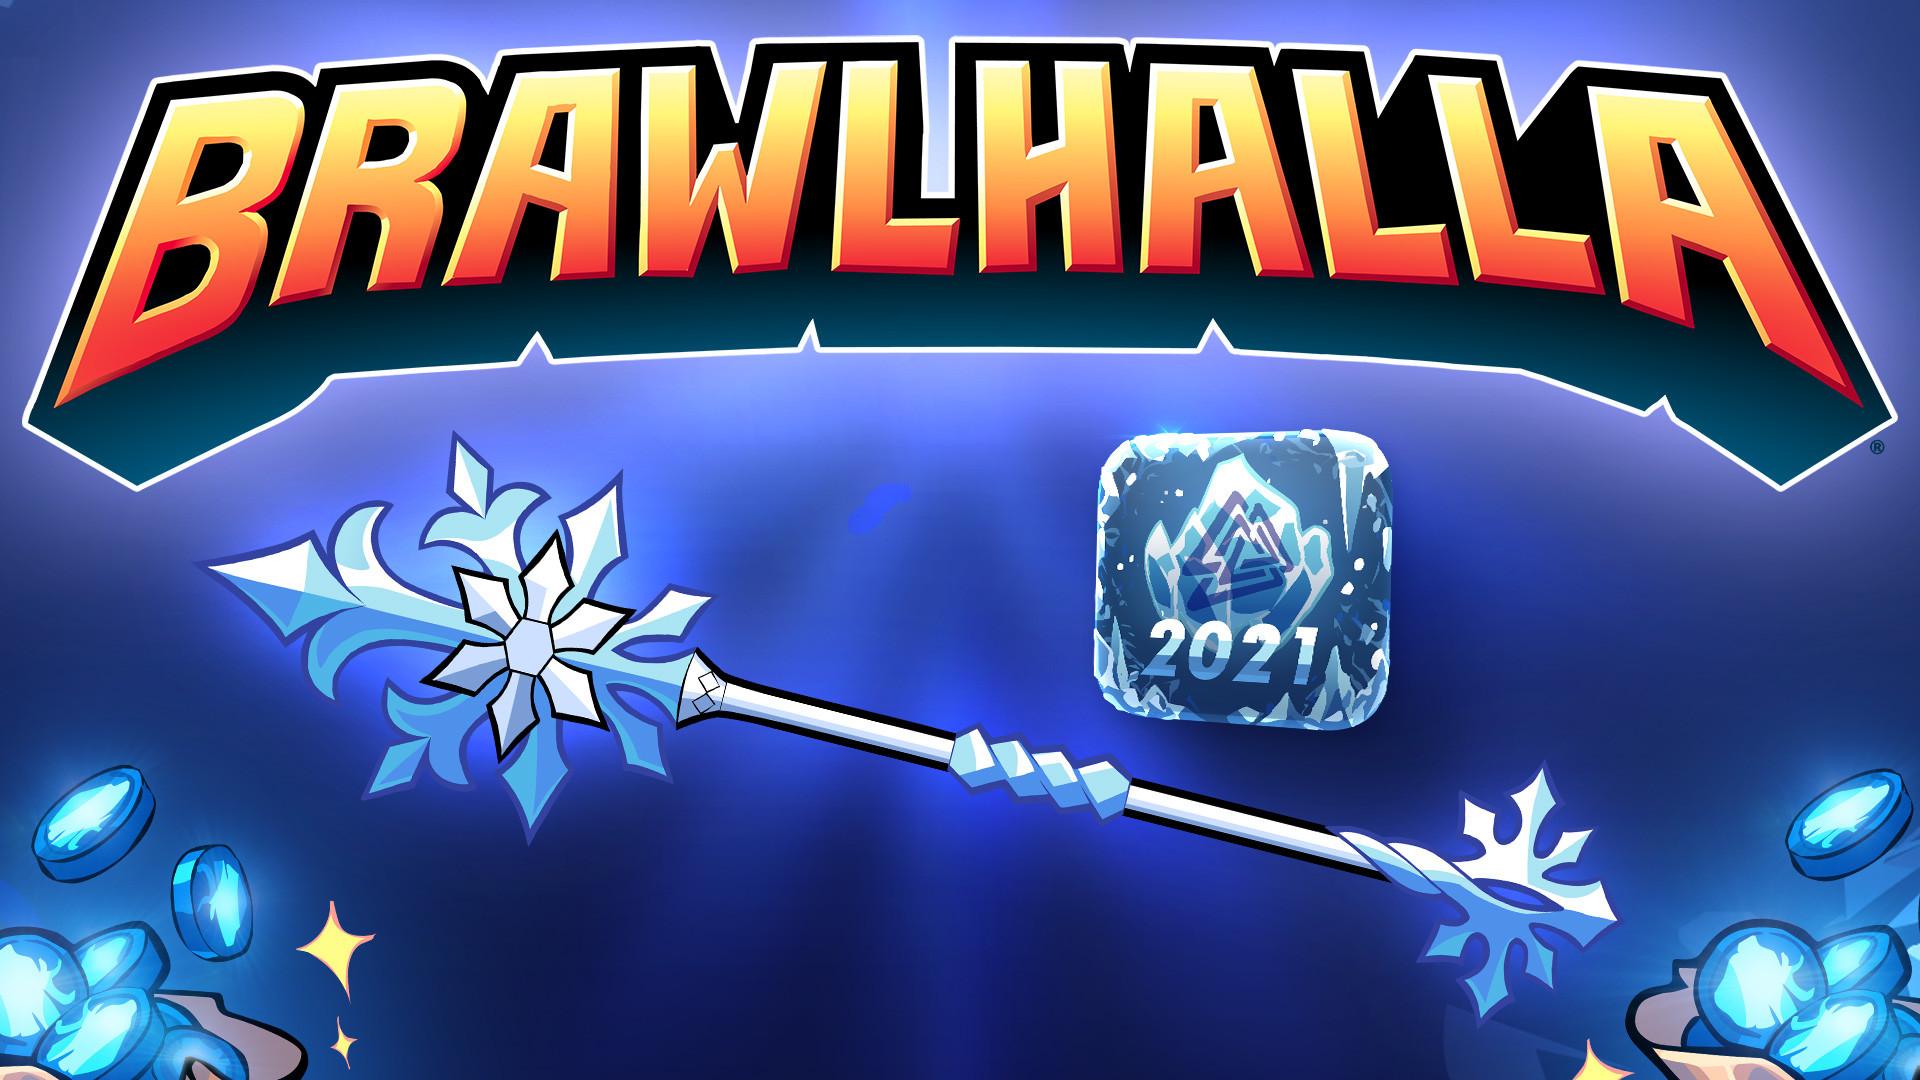 Brawlhalla - Winter Championship 2021 Pack